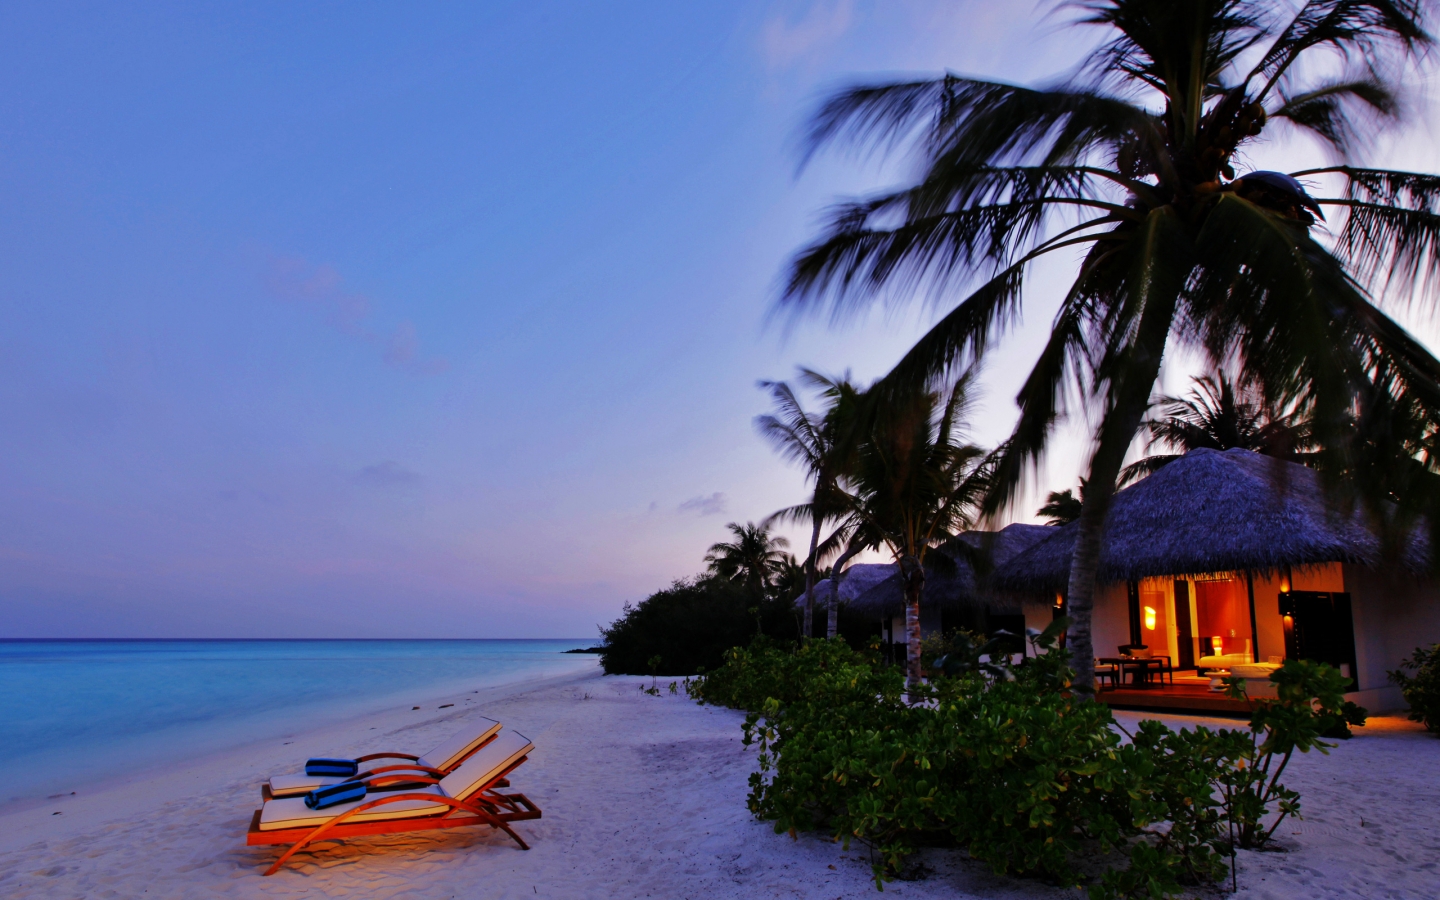 Luxury Beach Resort for 1440 x 900 widescreen resolution